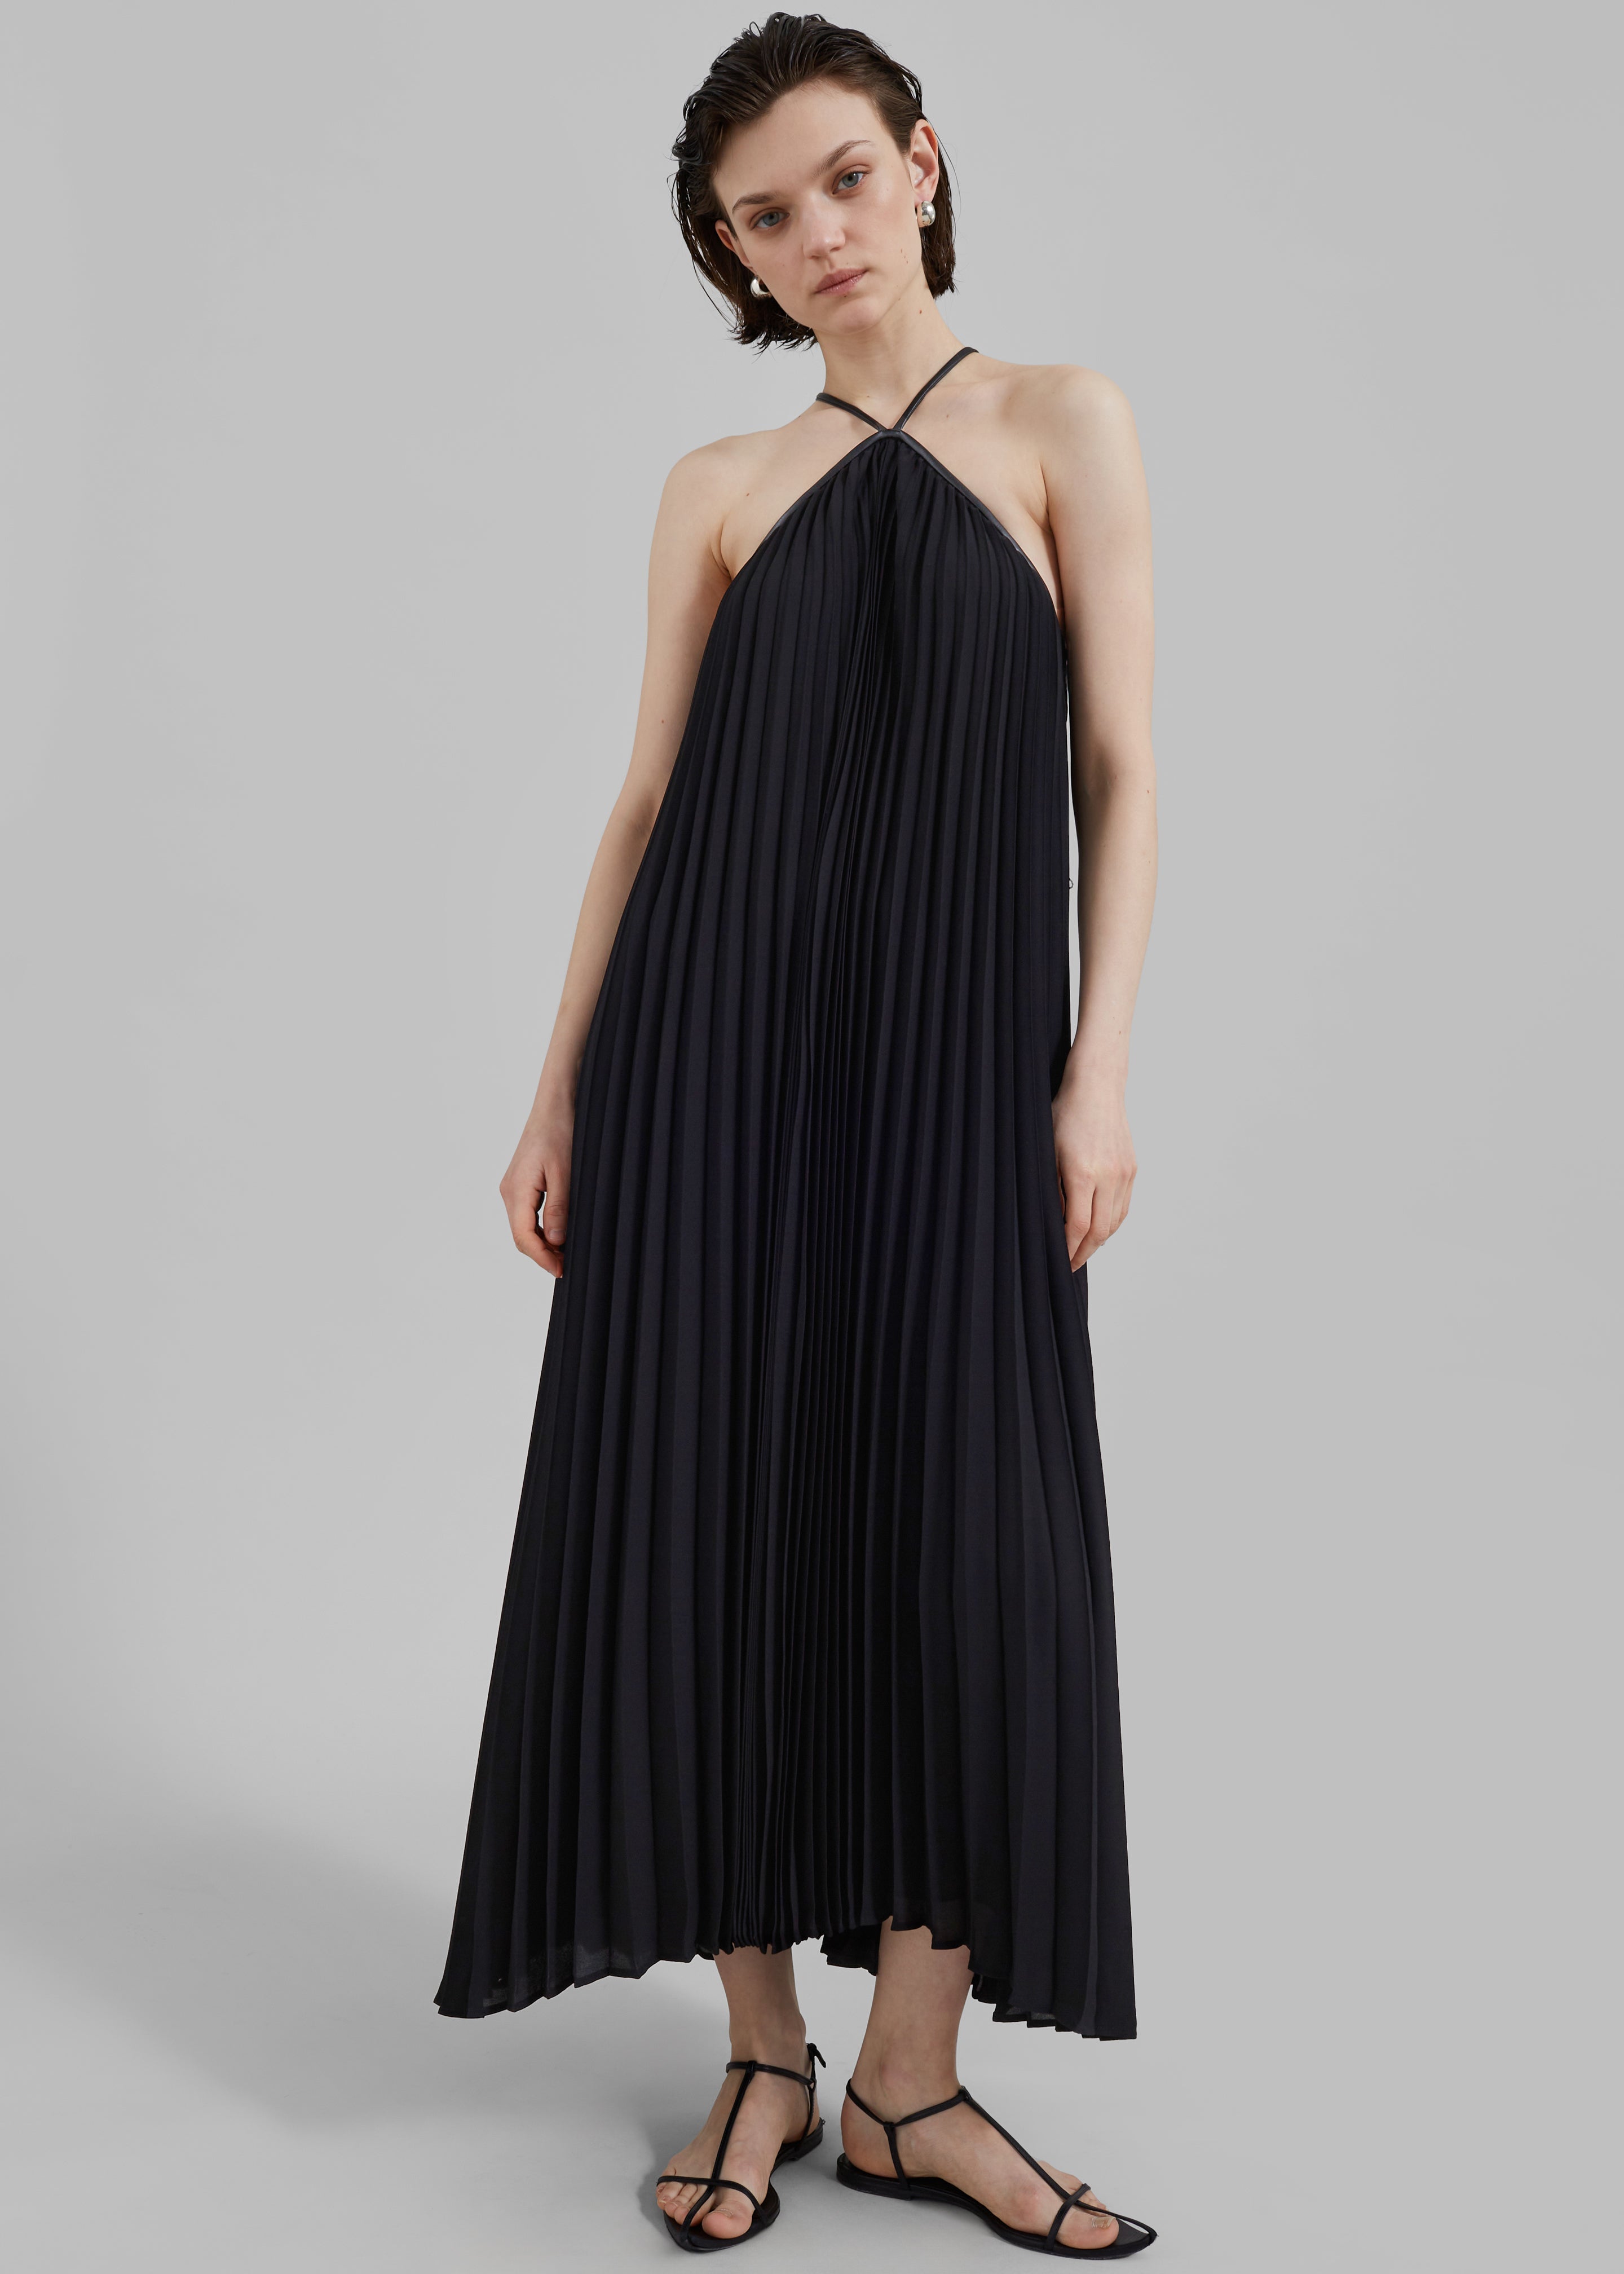 Proenza Schouler White Label Celeste Lightweight Crepe Dress  - Black - 5